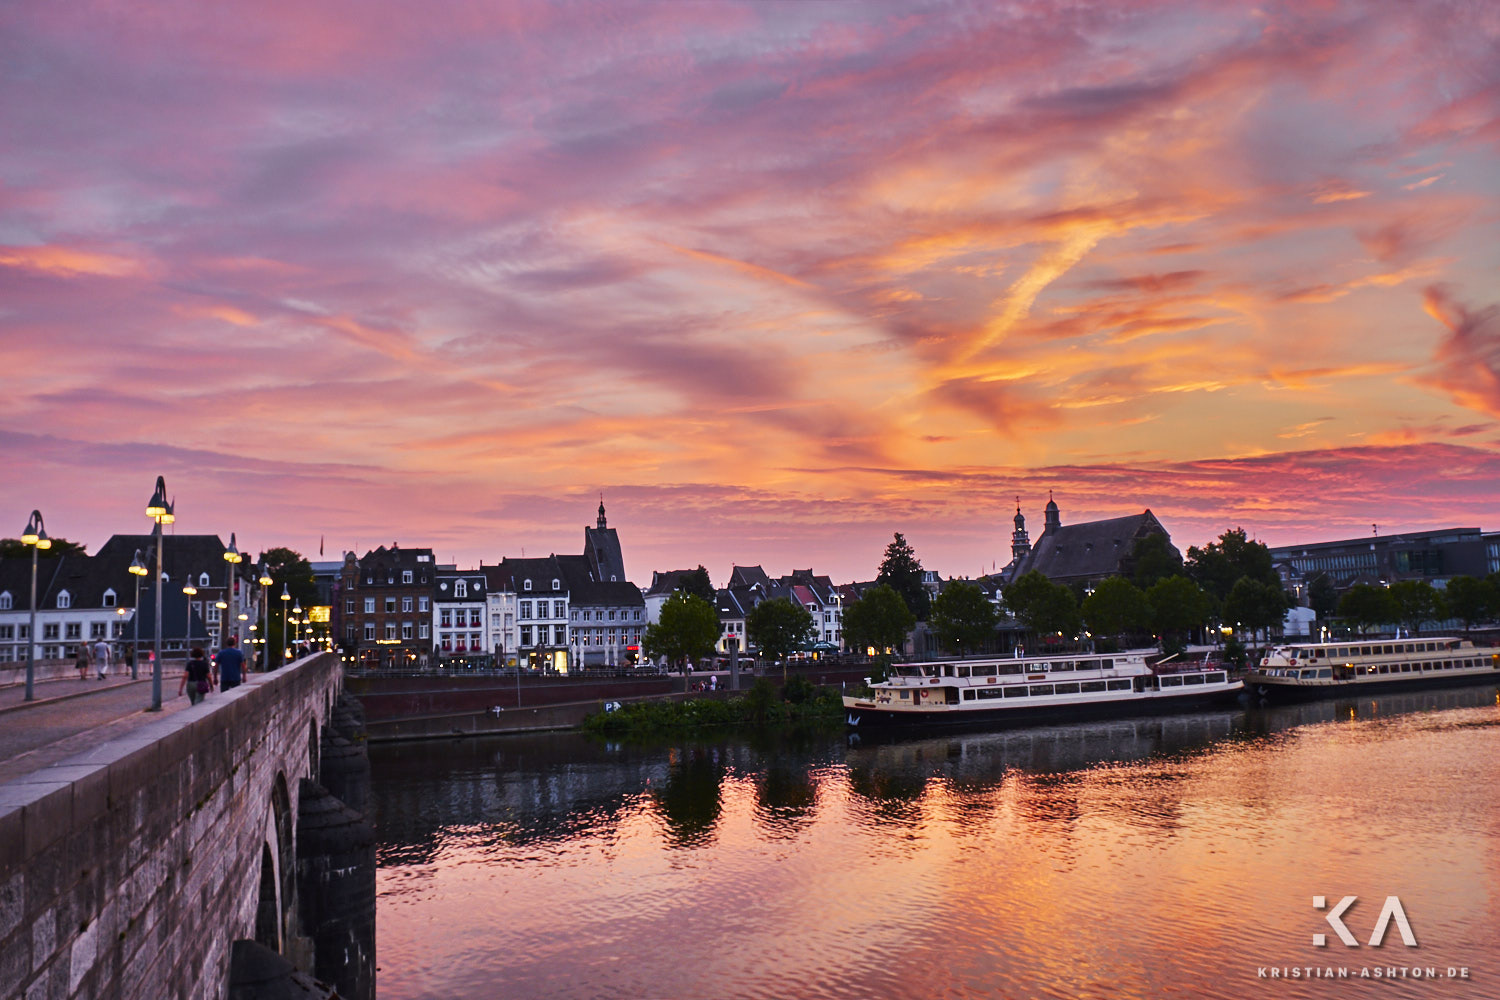 Sunset over Maastricht